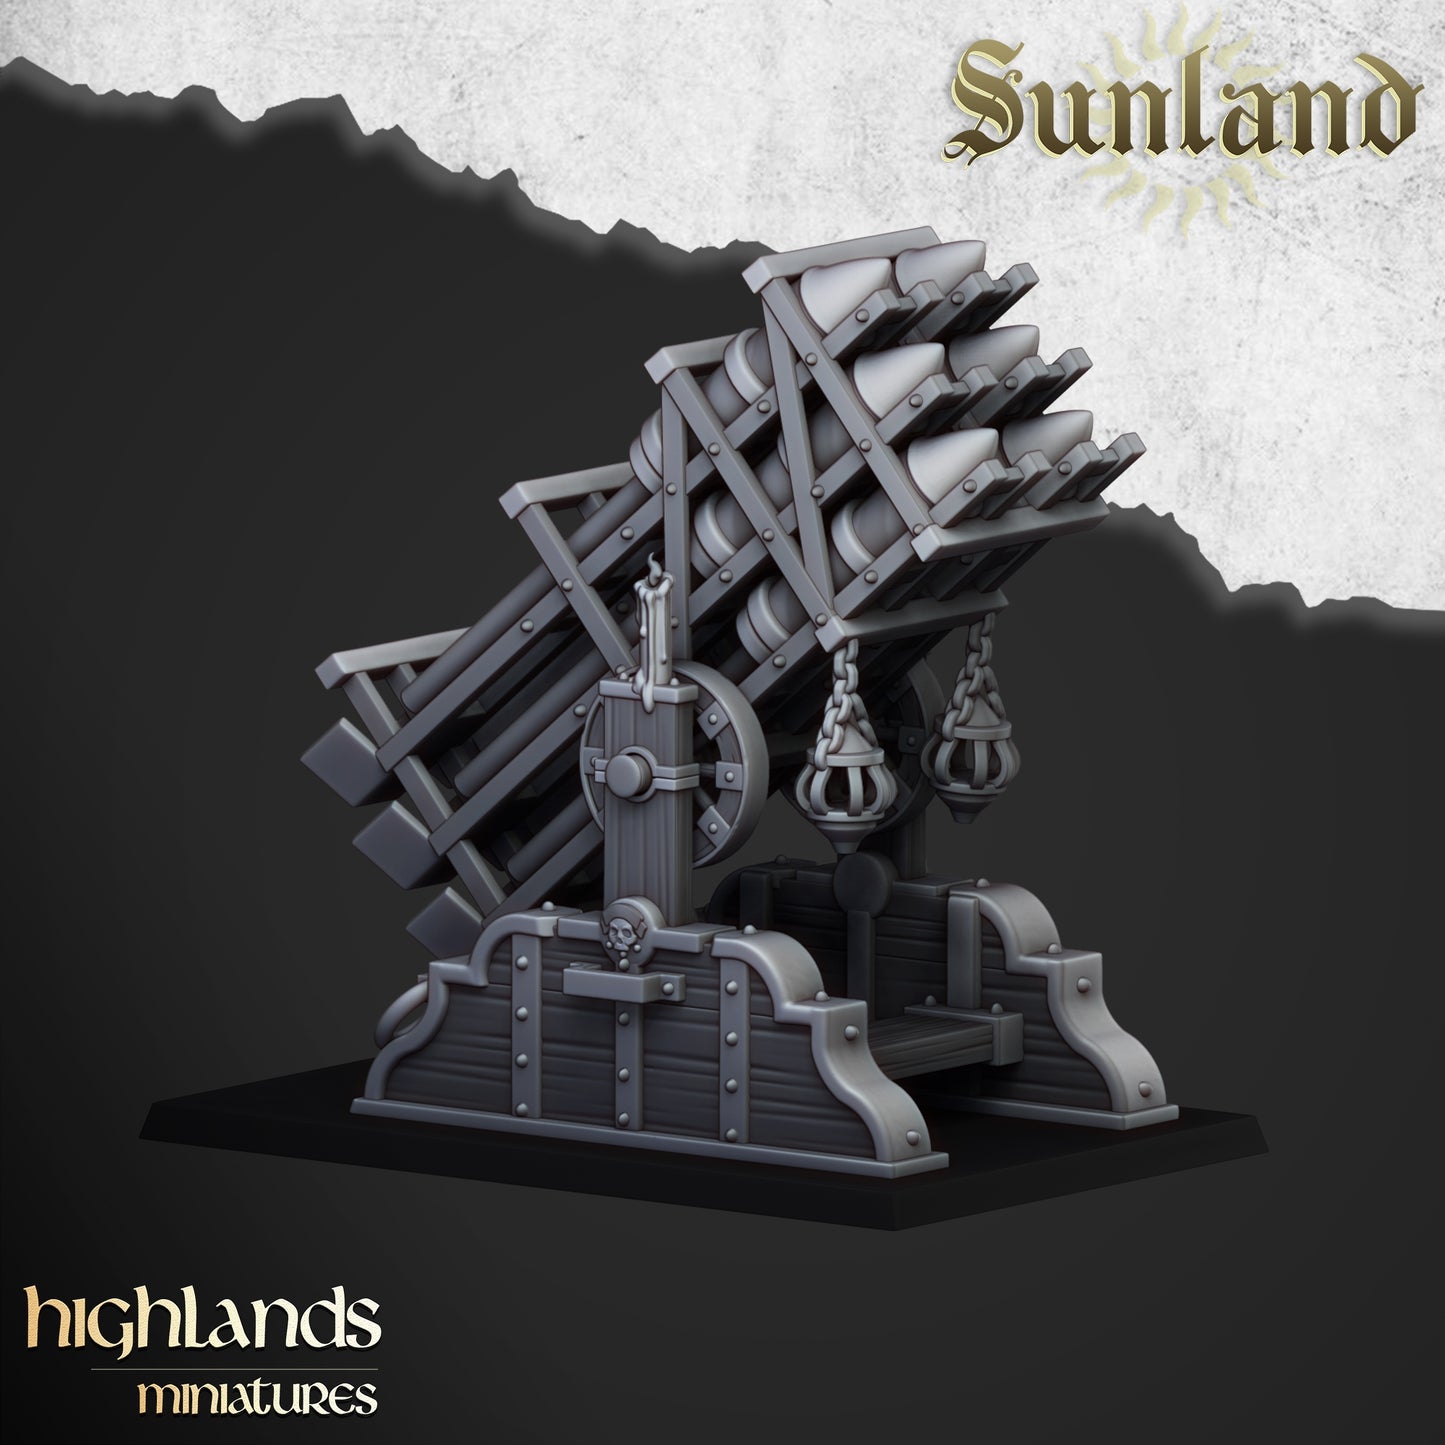 Sunland Artillery Units from Highlands Miniatures